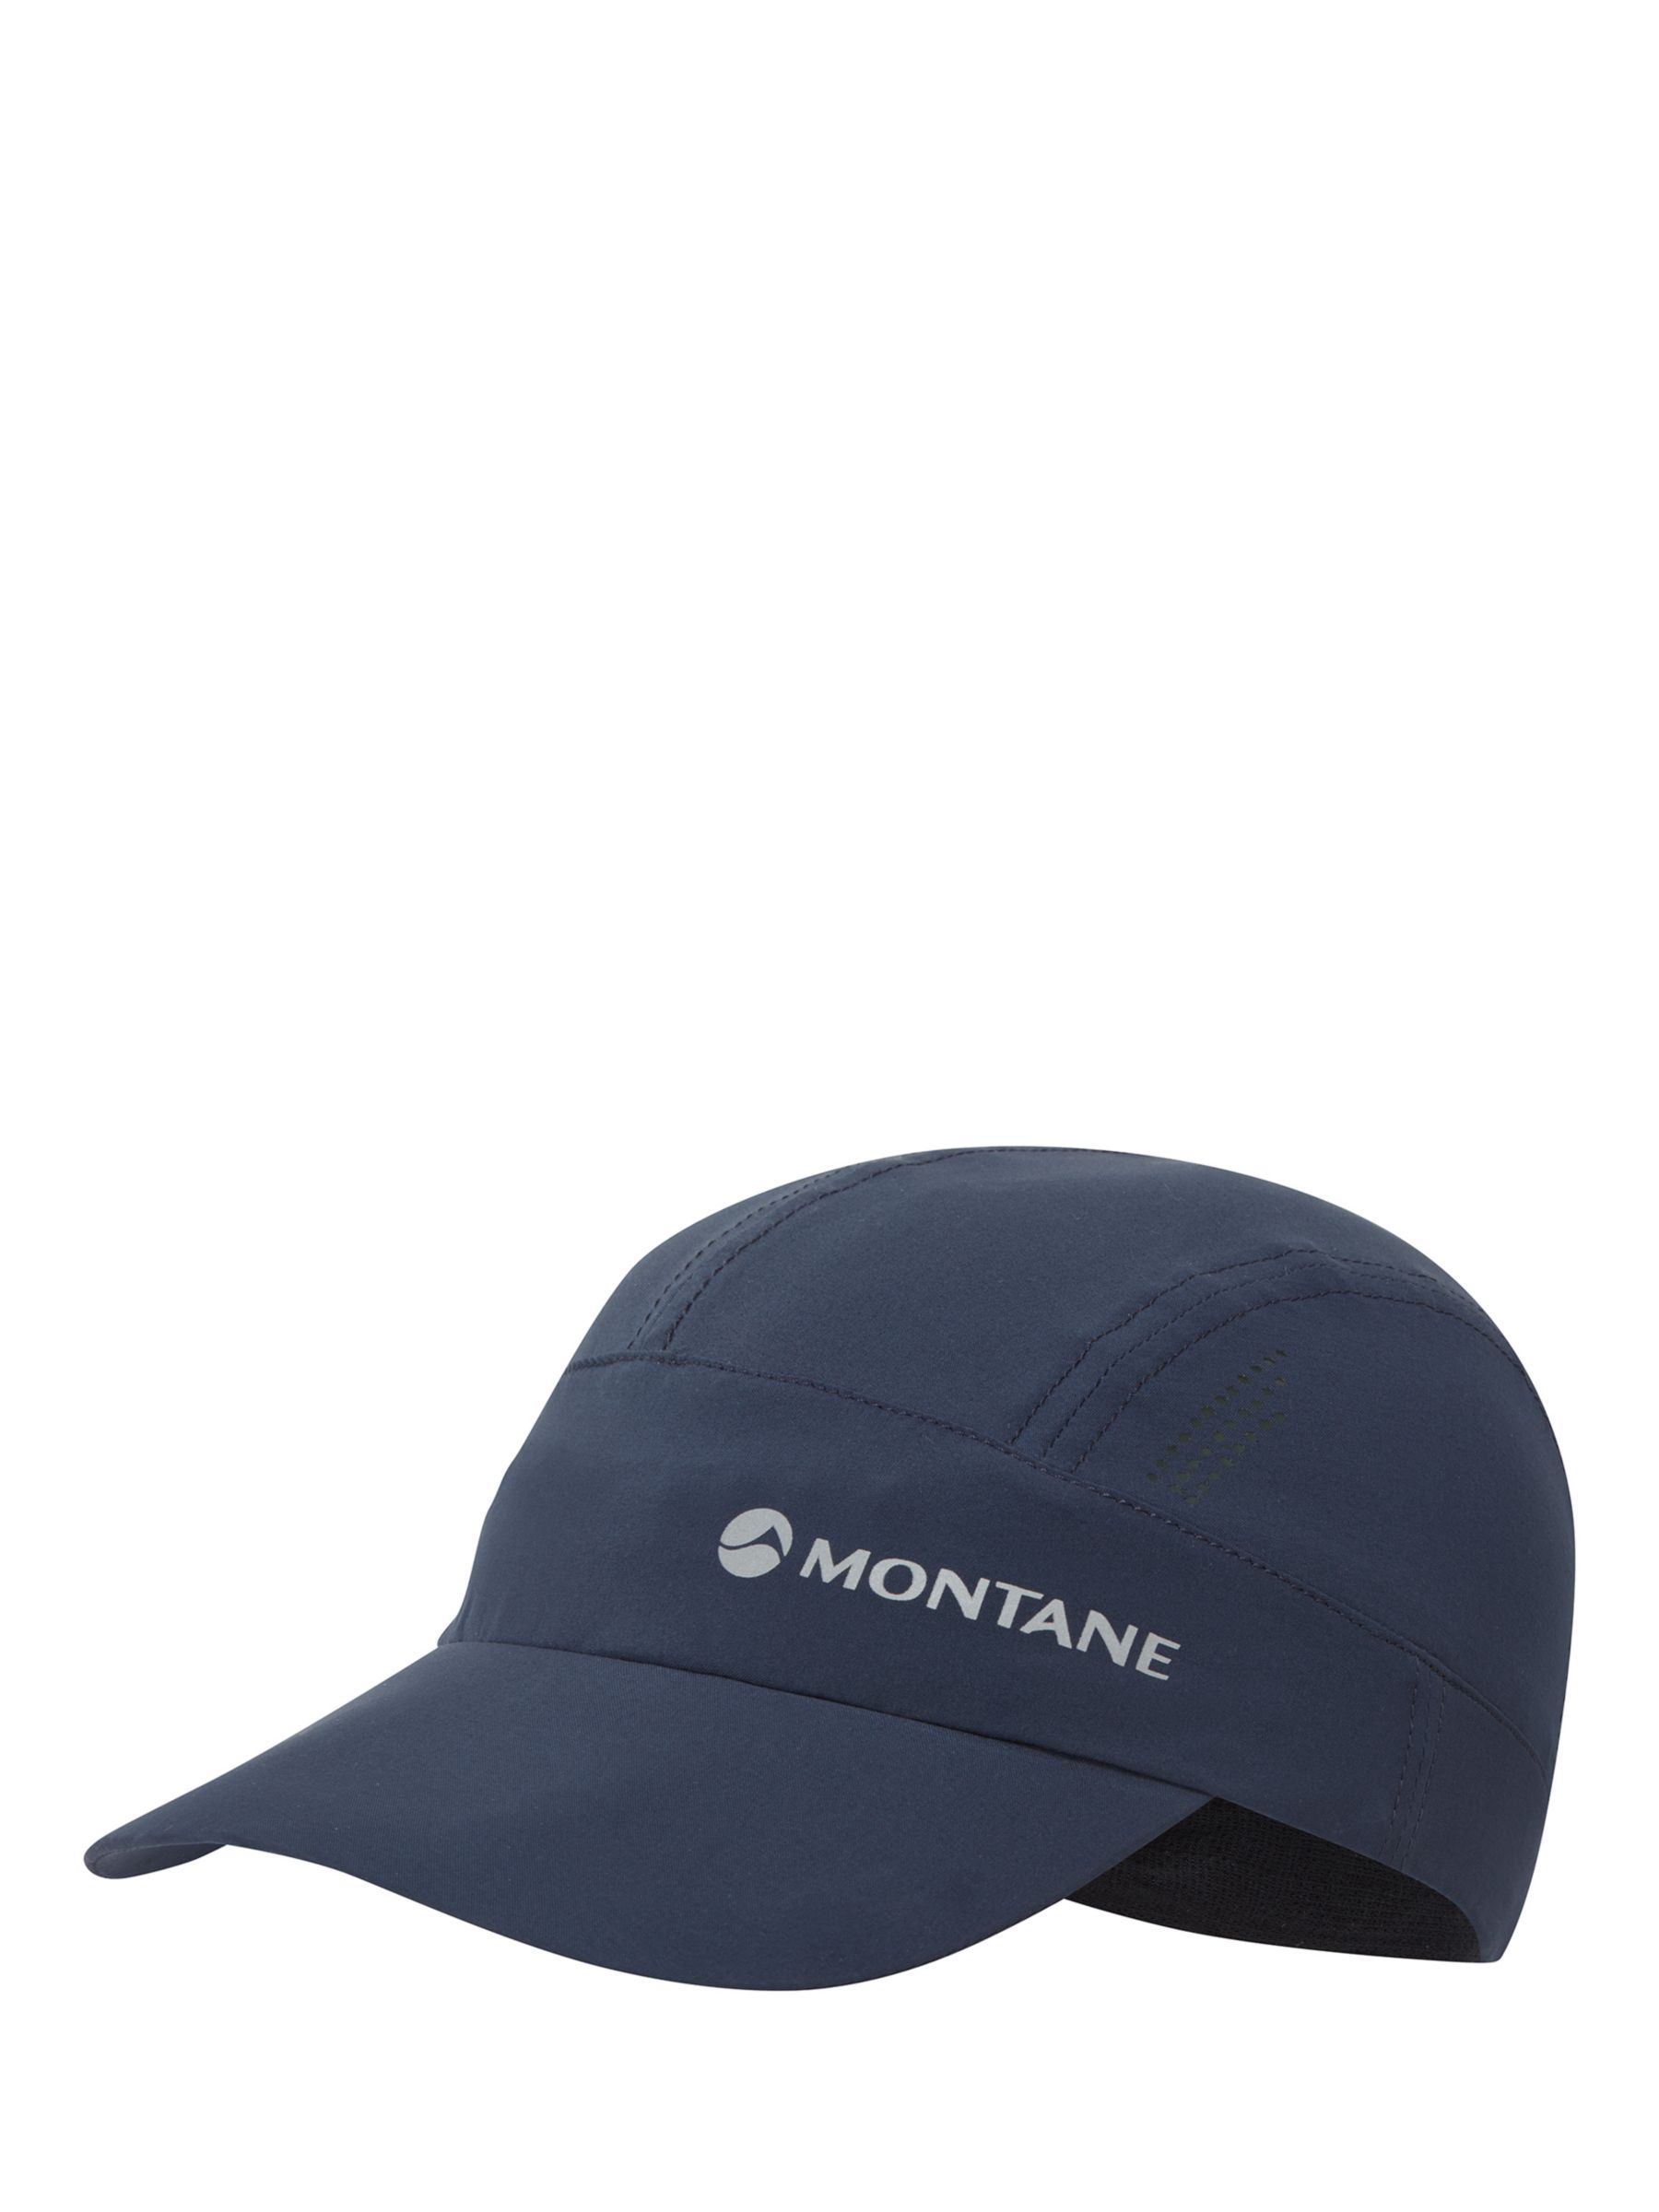 Montane Trail Lite Cap, Eclipse Blue, One Size